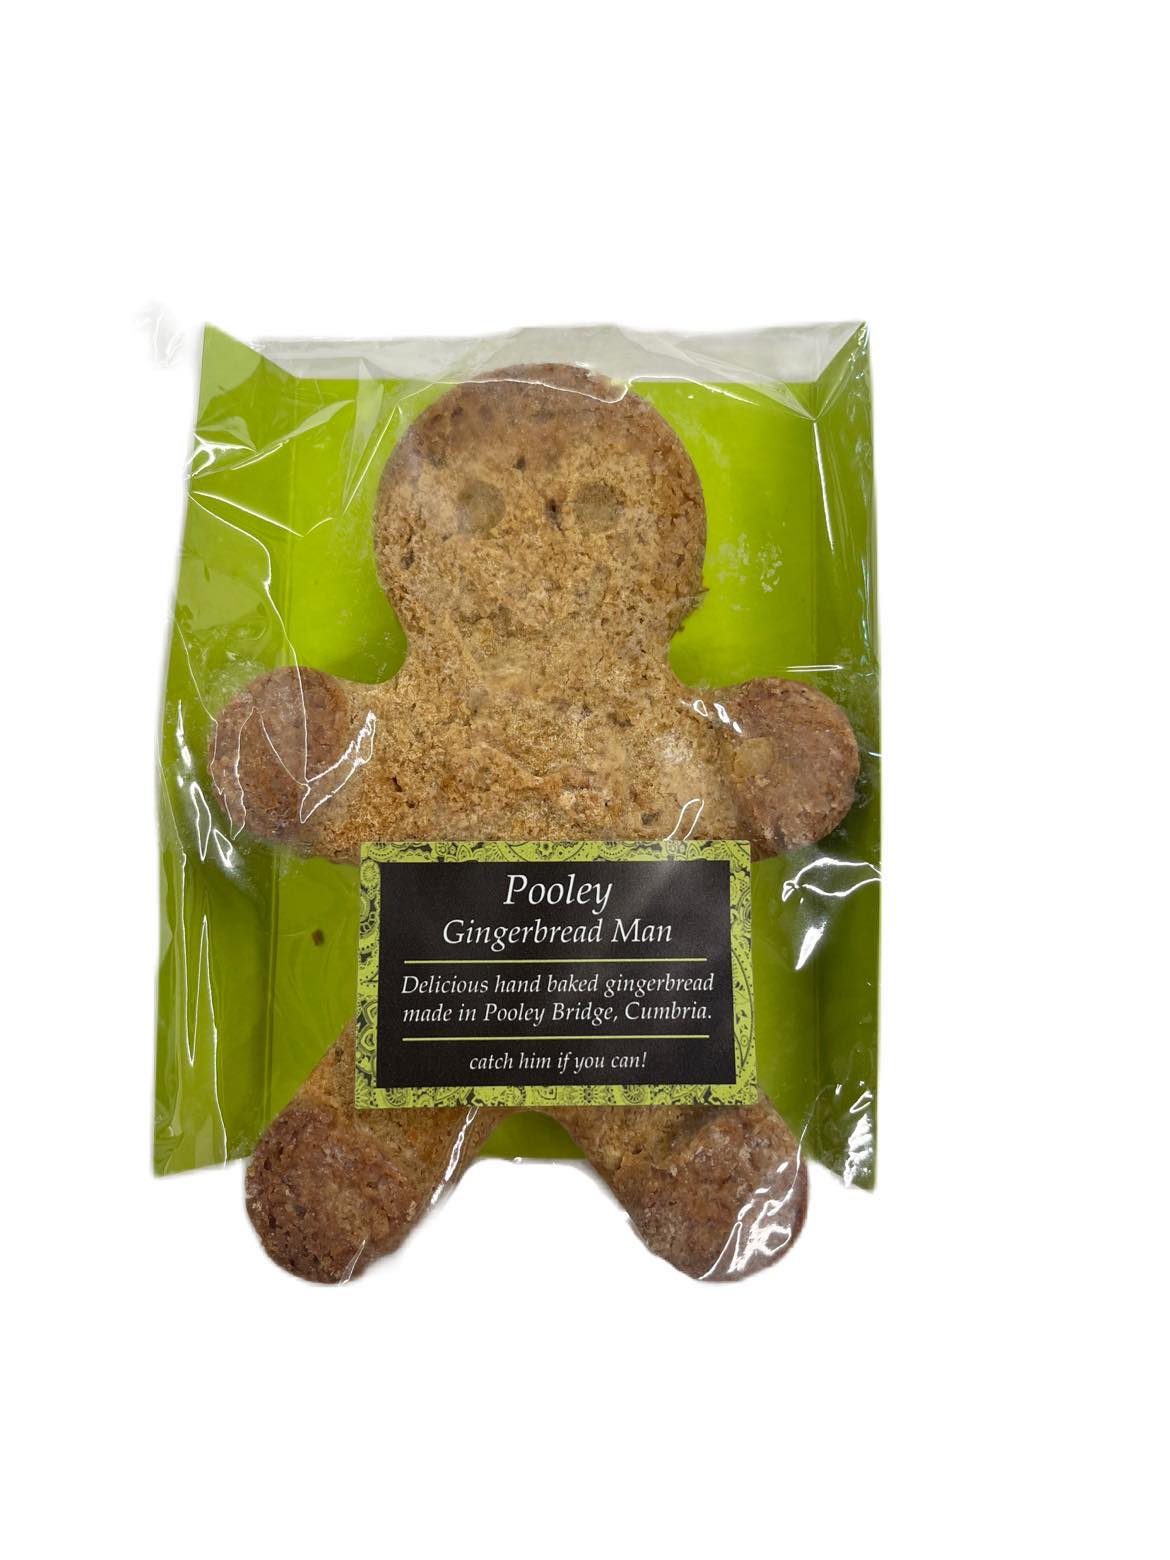 Pooley Gingerbread Man